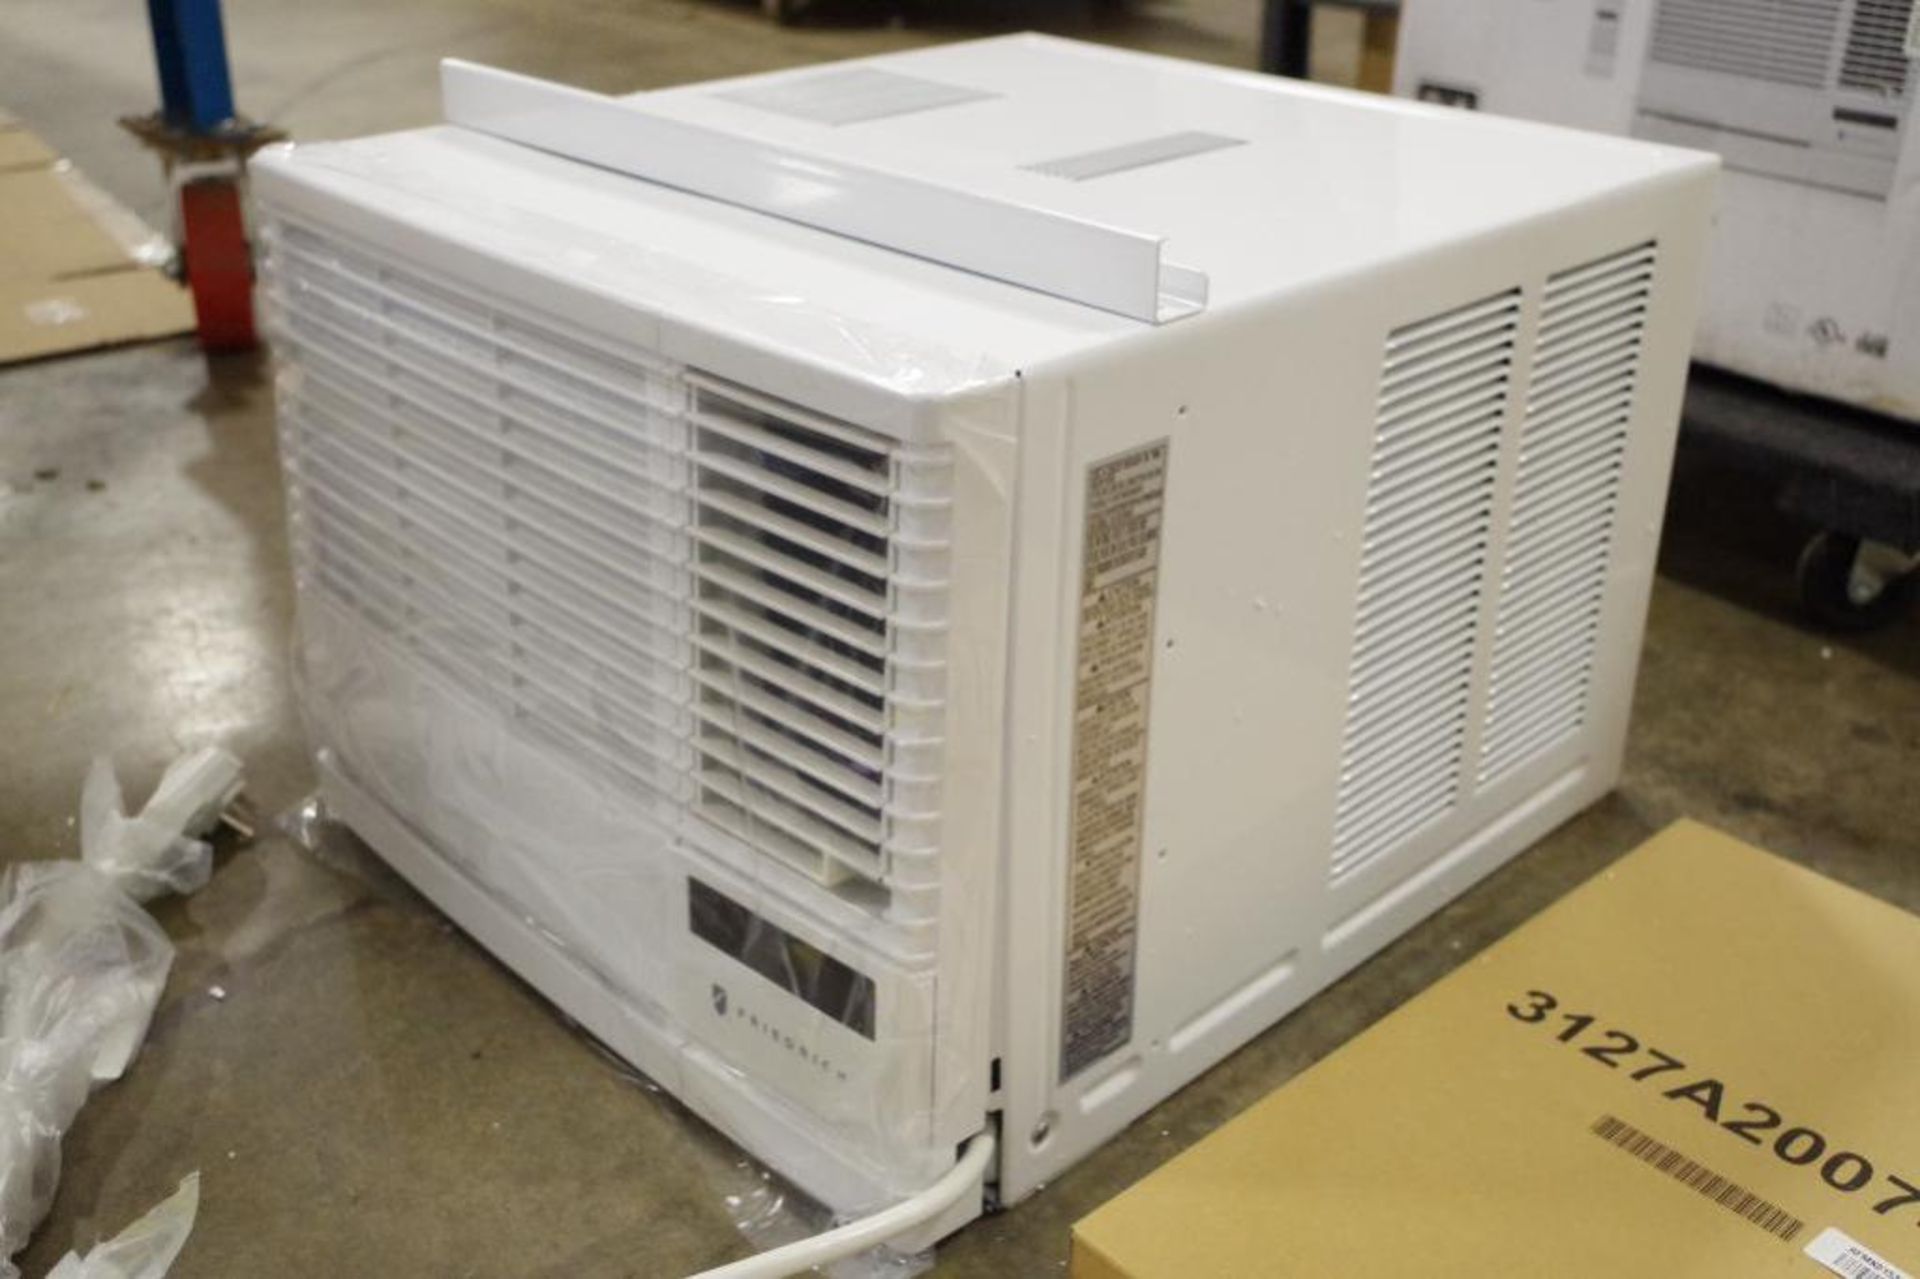 FRIEDRICH Electric Window Air Conditioner w/ Heat M/N EP08G11 - Image 2 of 7